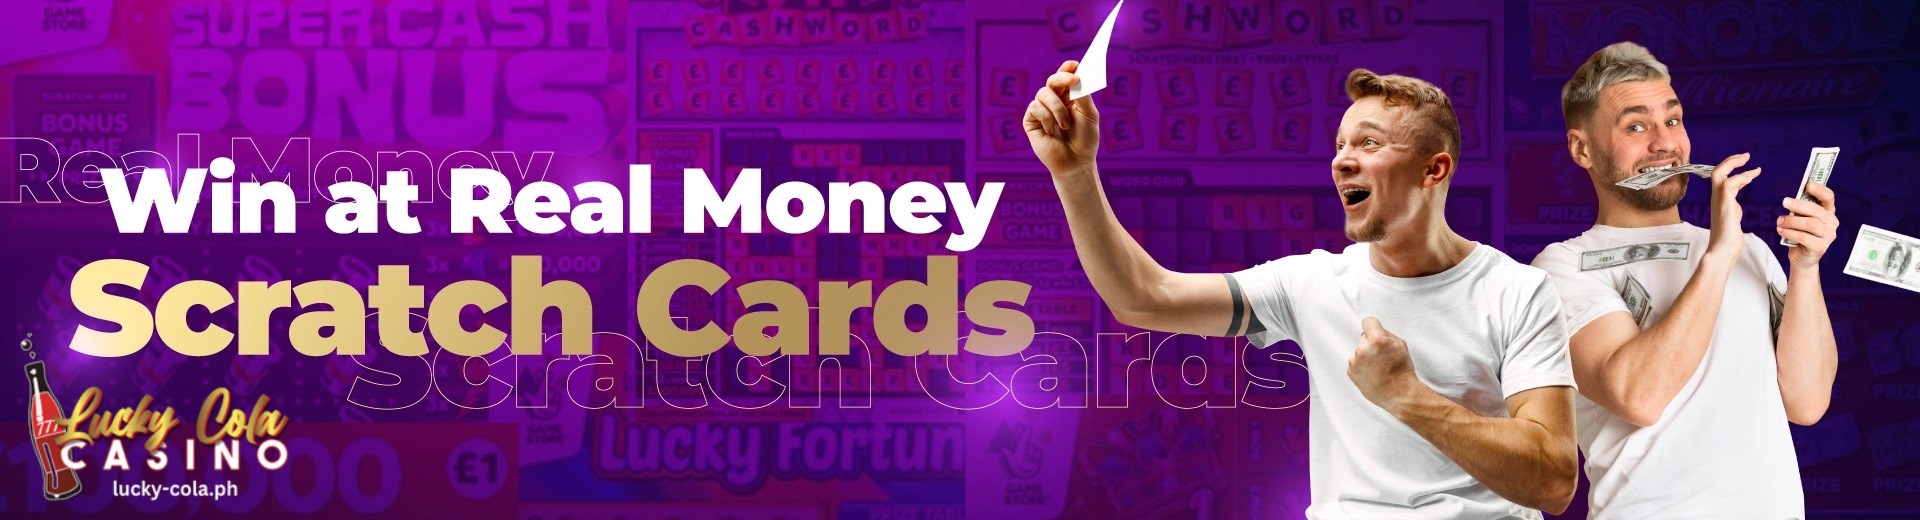 Paano Manalo sa Real Money Scratch Cards Lucky Cola